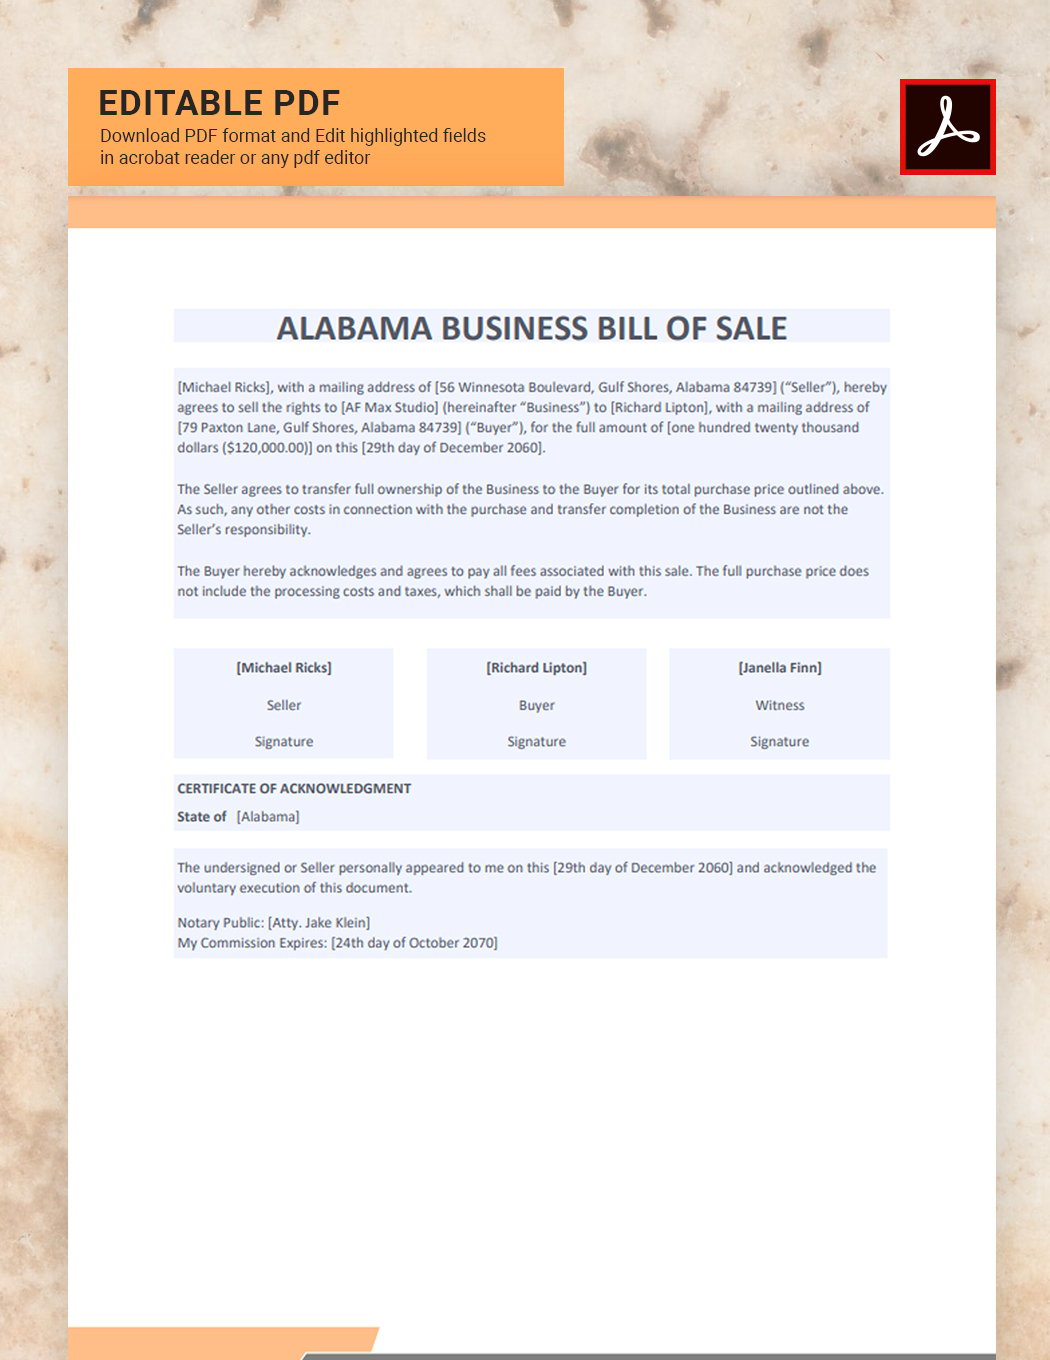 Alabama Business Bill of Sale Template